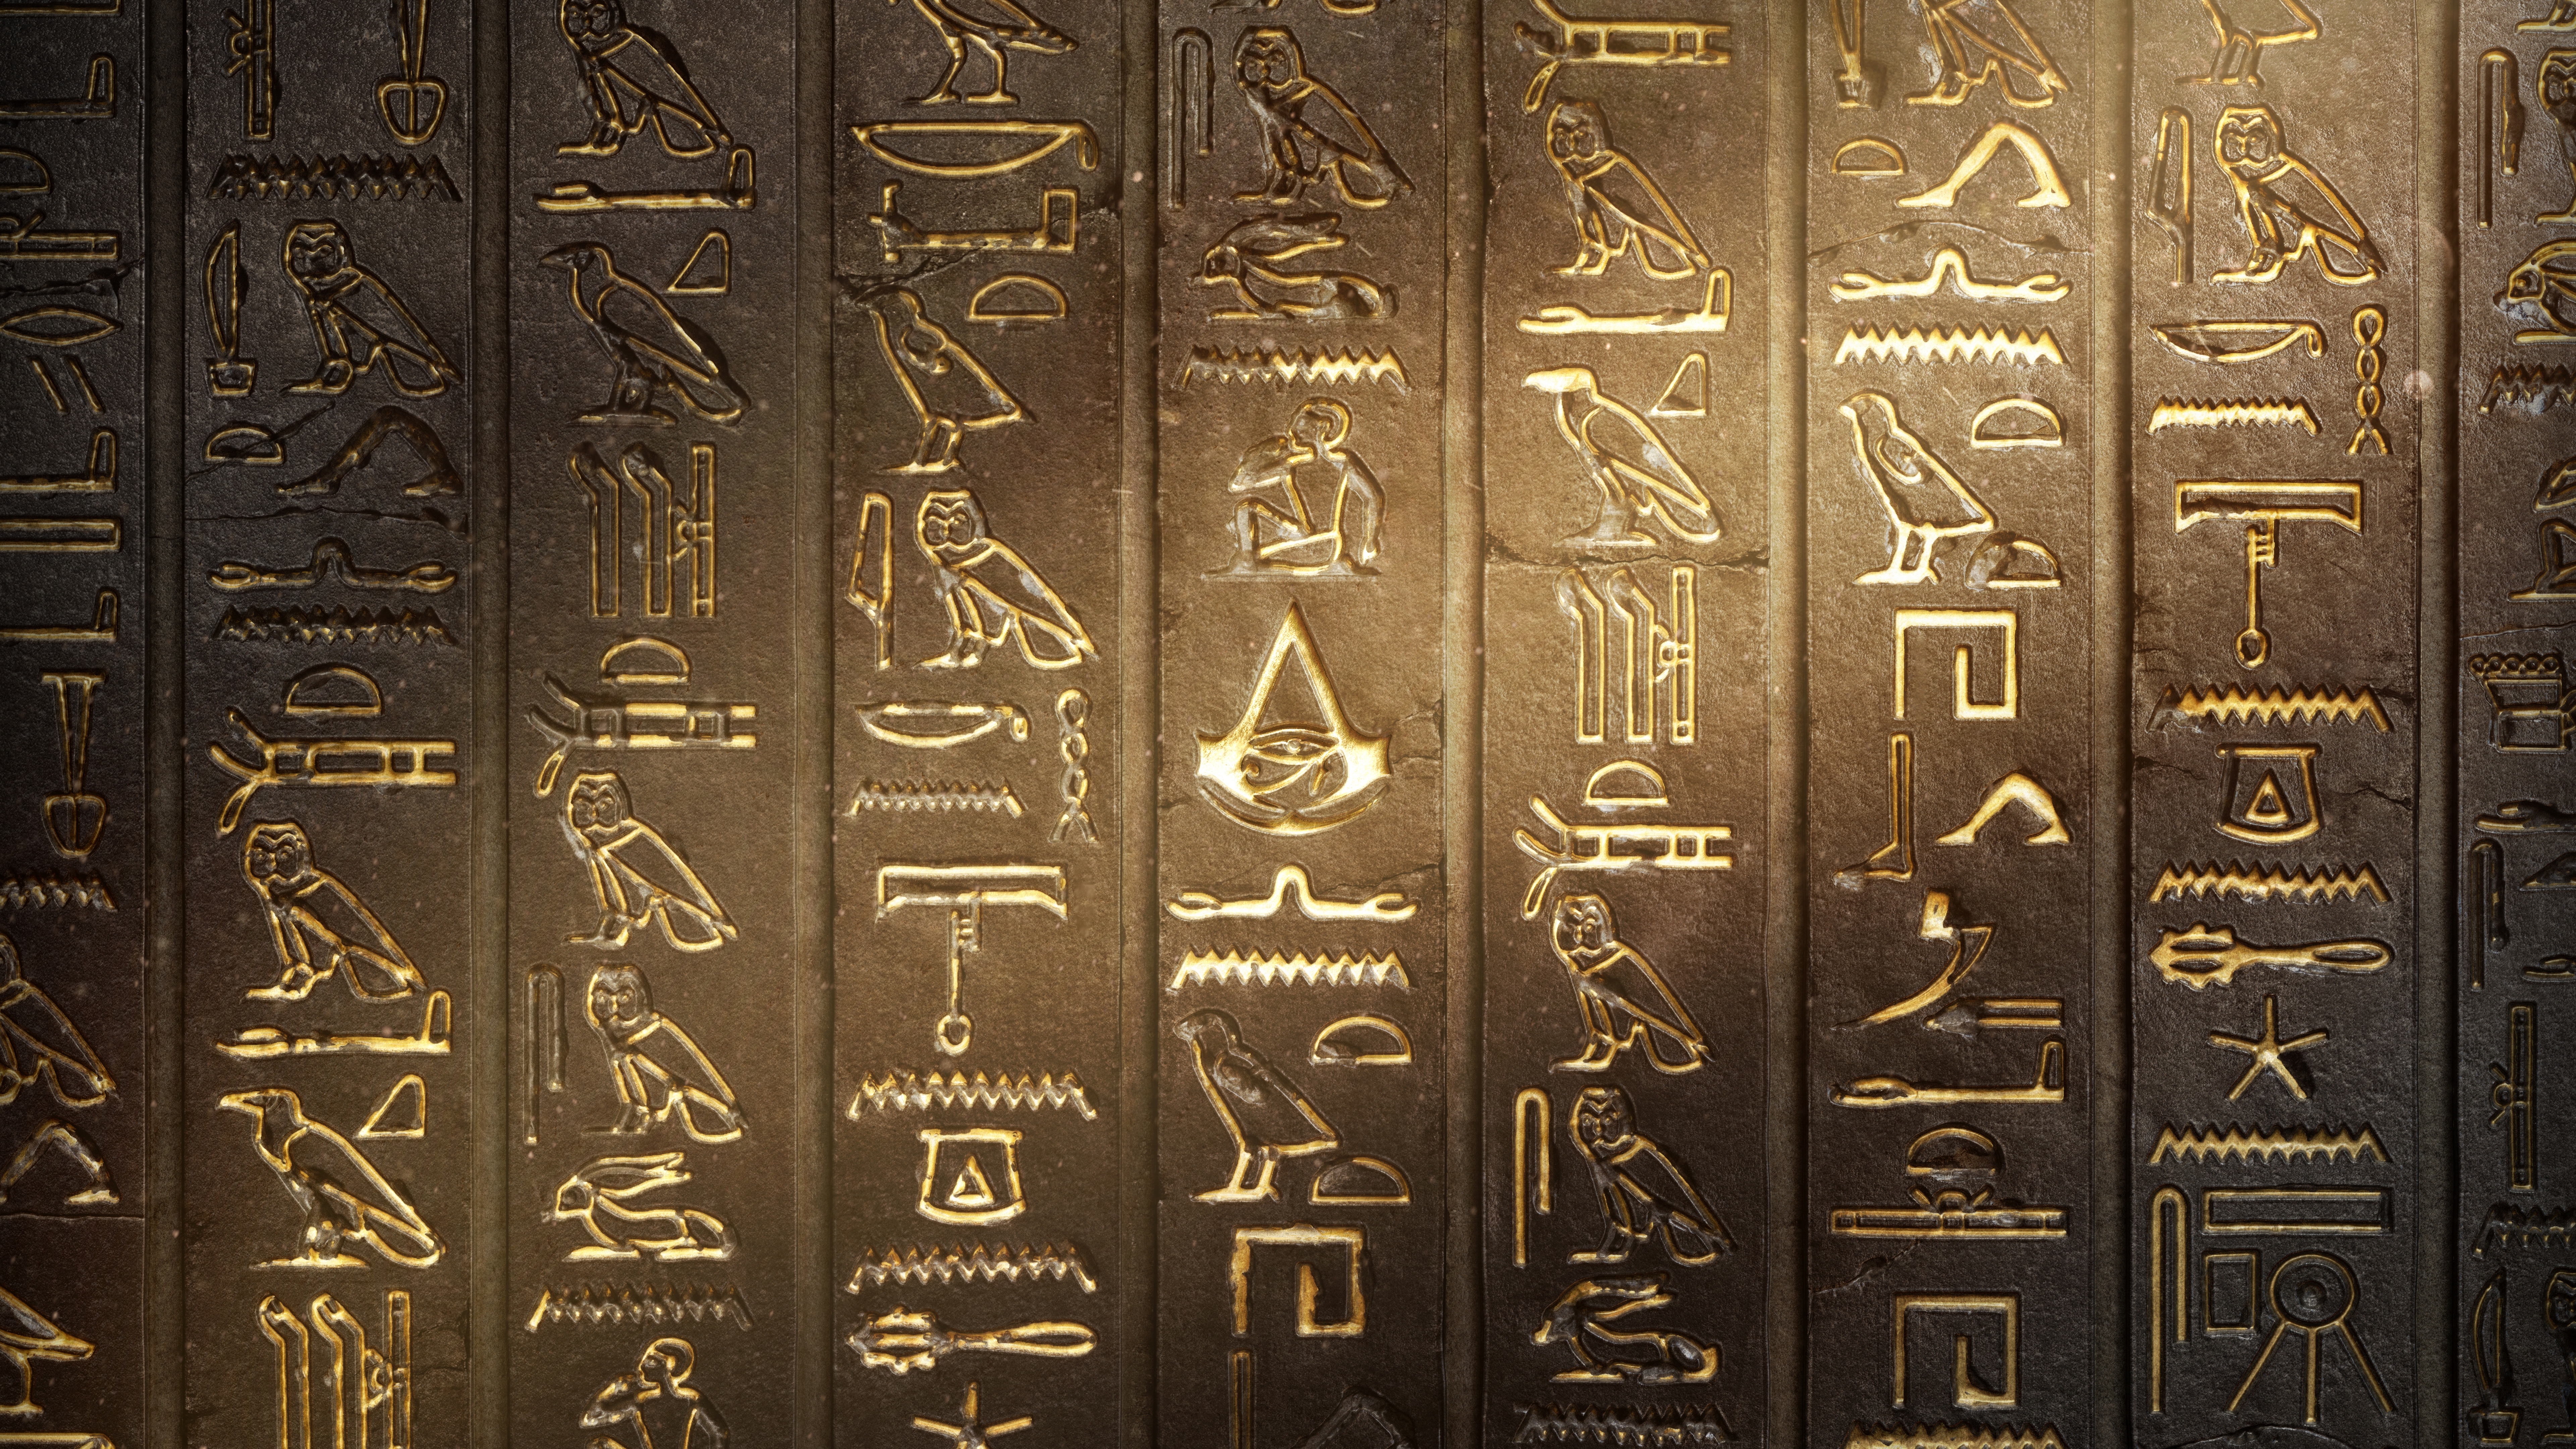 Video Games Assassins Creed Wall Hieroglyphs Engraving Symbols Assassins Creed Origins 7680x4320